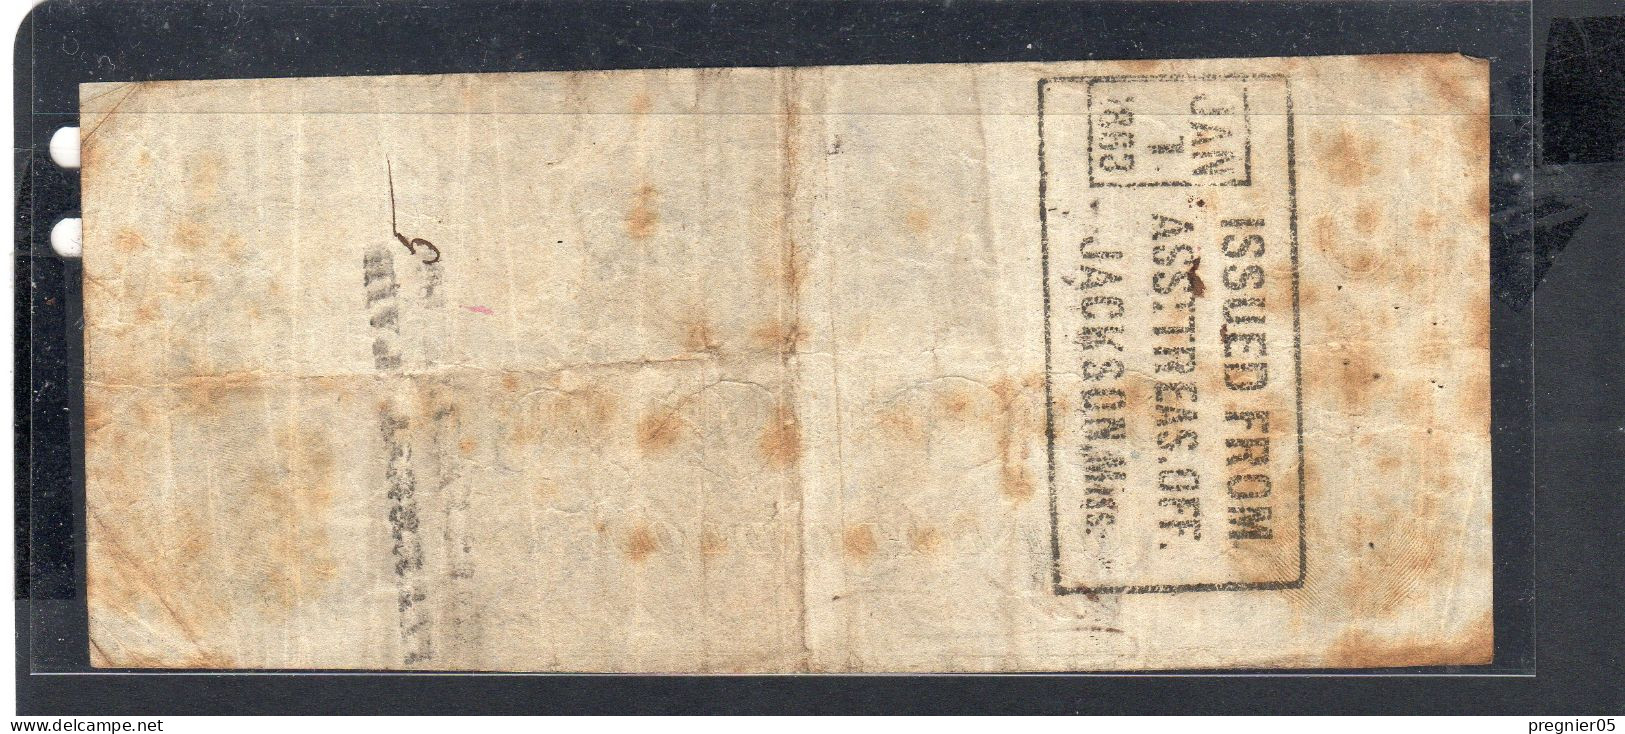 USA - Billet  100 Dollar États Confédérés 1862 TTB/VF P.045 - Devise De La Confédération (1861-1864)